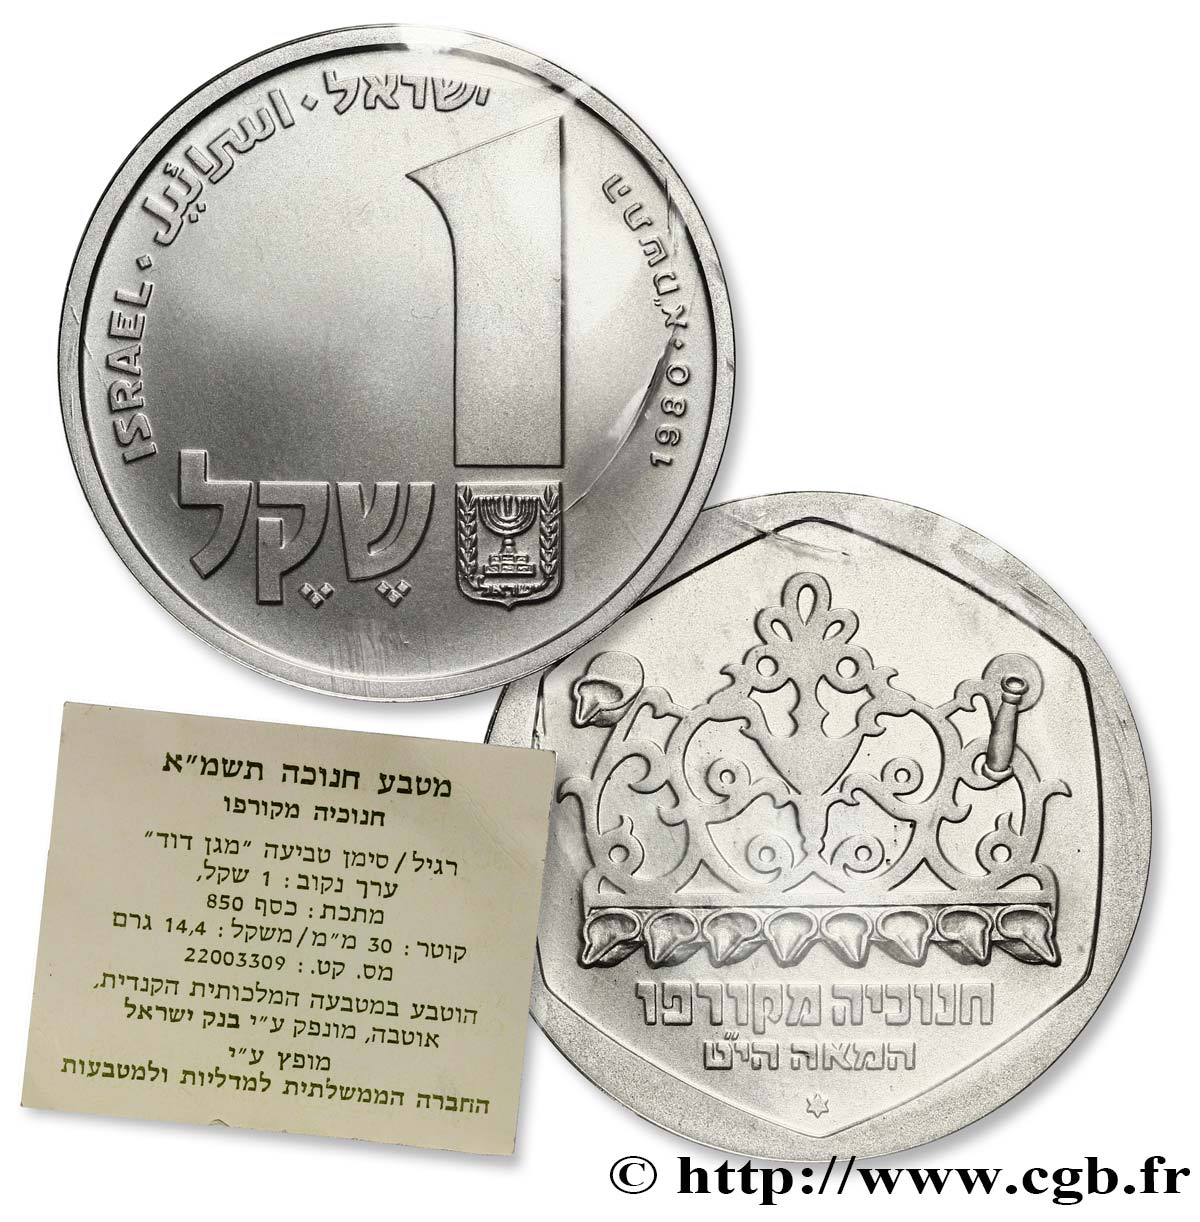 ISRAËL 1 Sheqel Hanukka - Lampe de Corfou an 5743 variété étoile de David 1980 Royal Canadian Mint FDC 